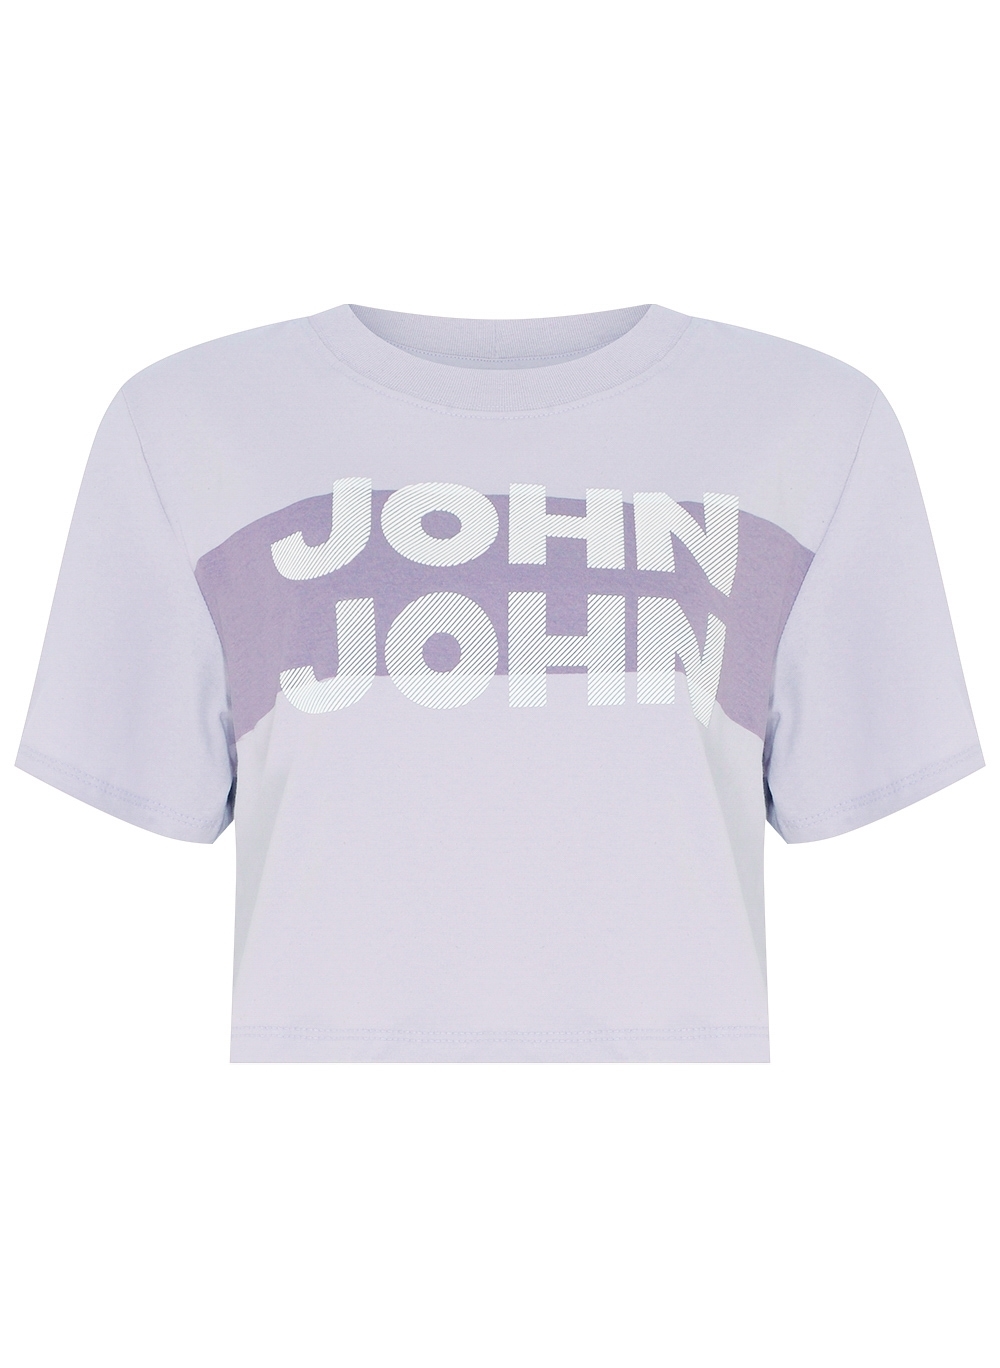 Camiseta Jhonny John John Feminina 03.62.0312 - Camiseta